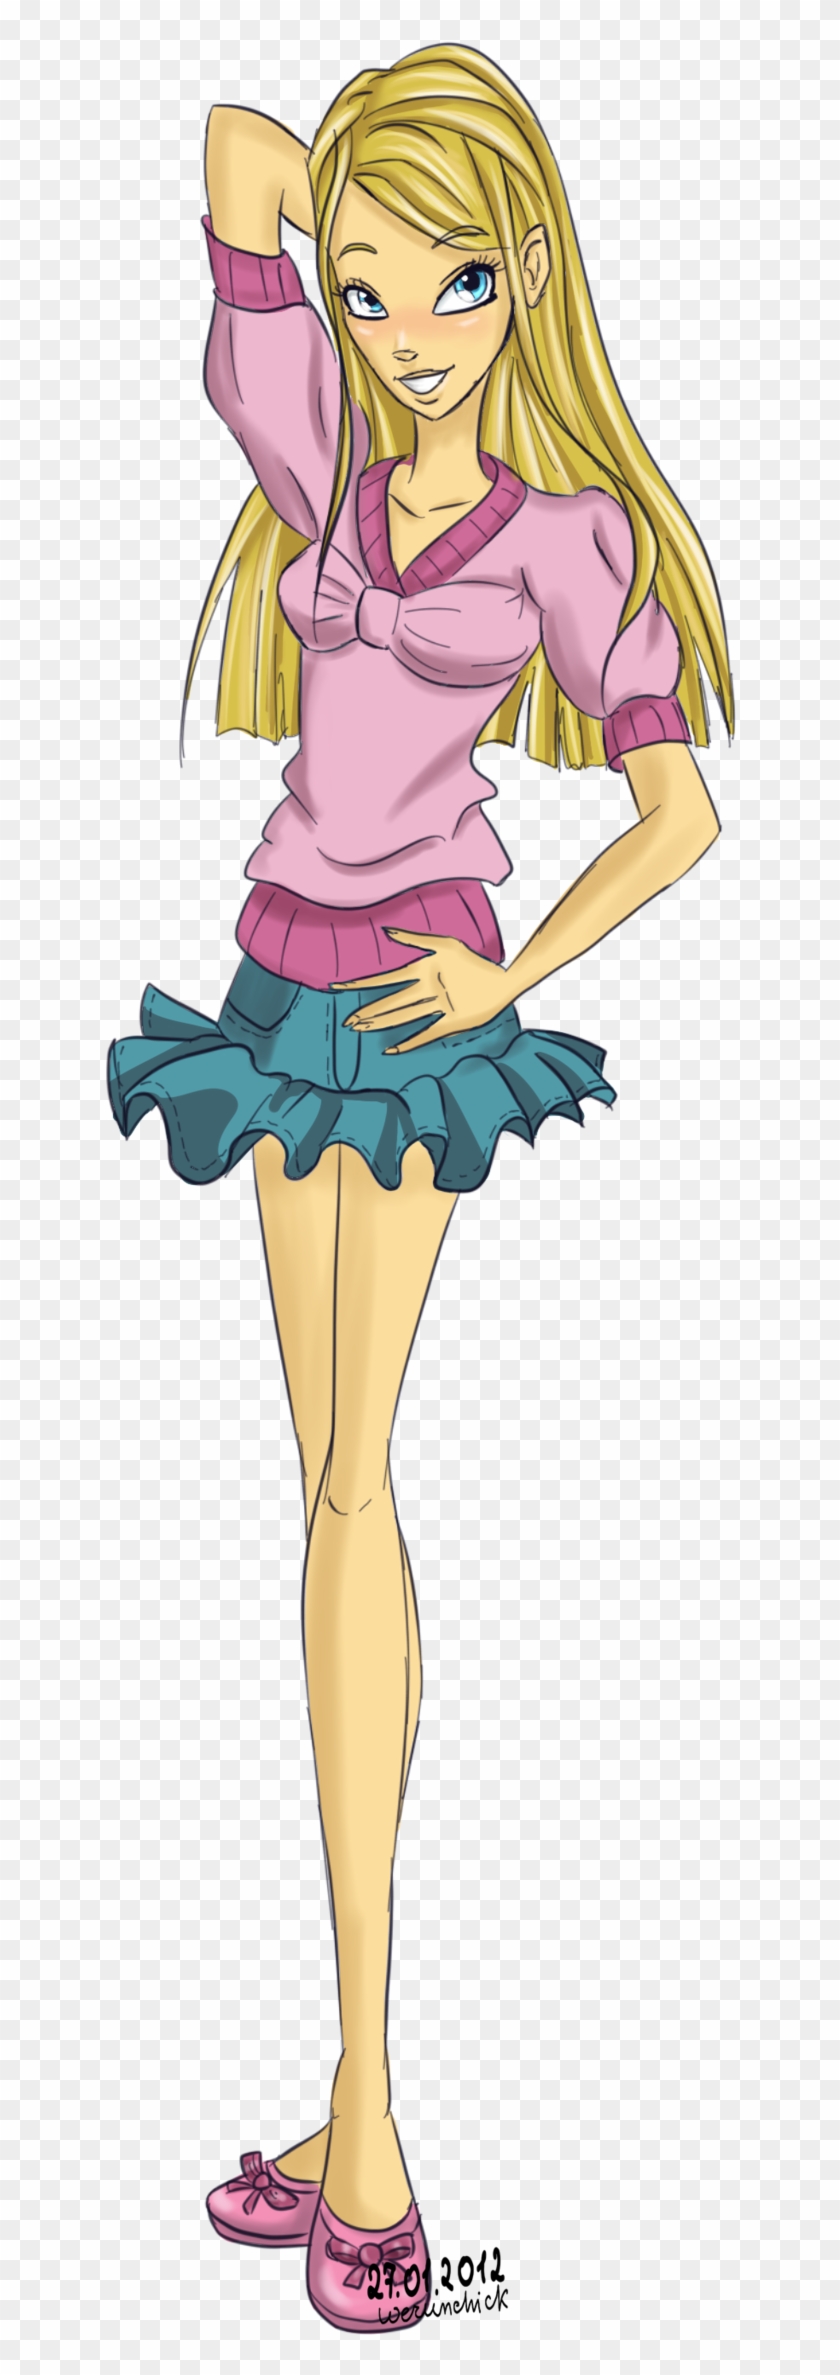 Fairy Mangaka Pin-up Girl Cartoon - Illustration #1146029